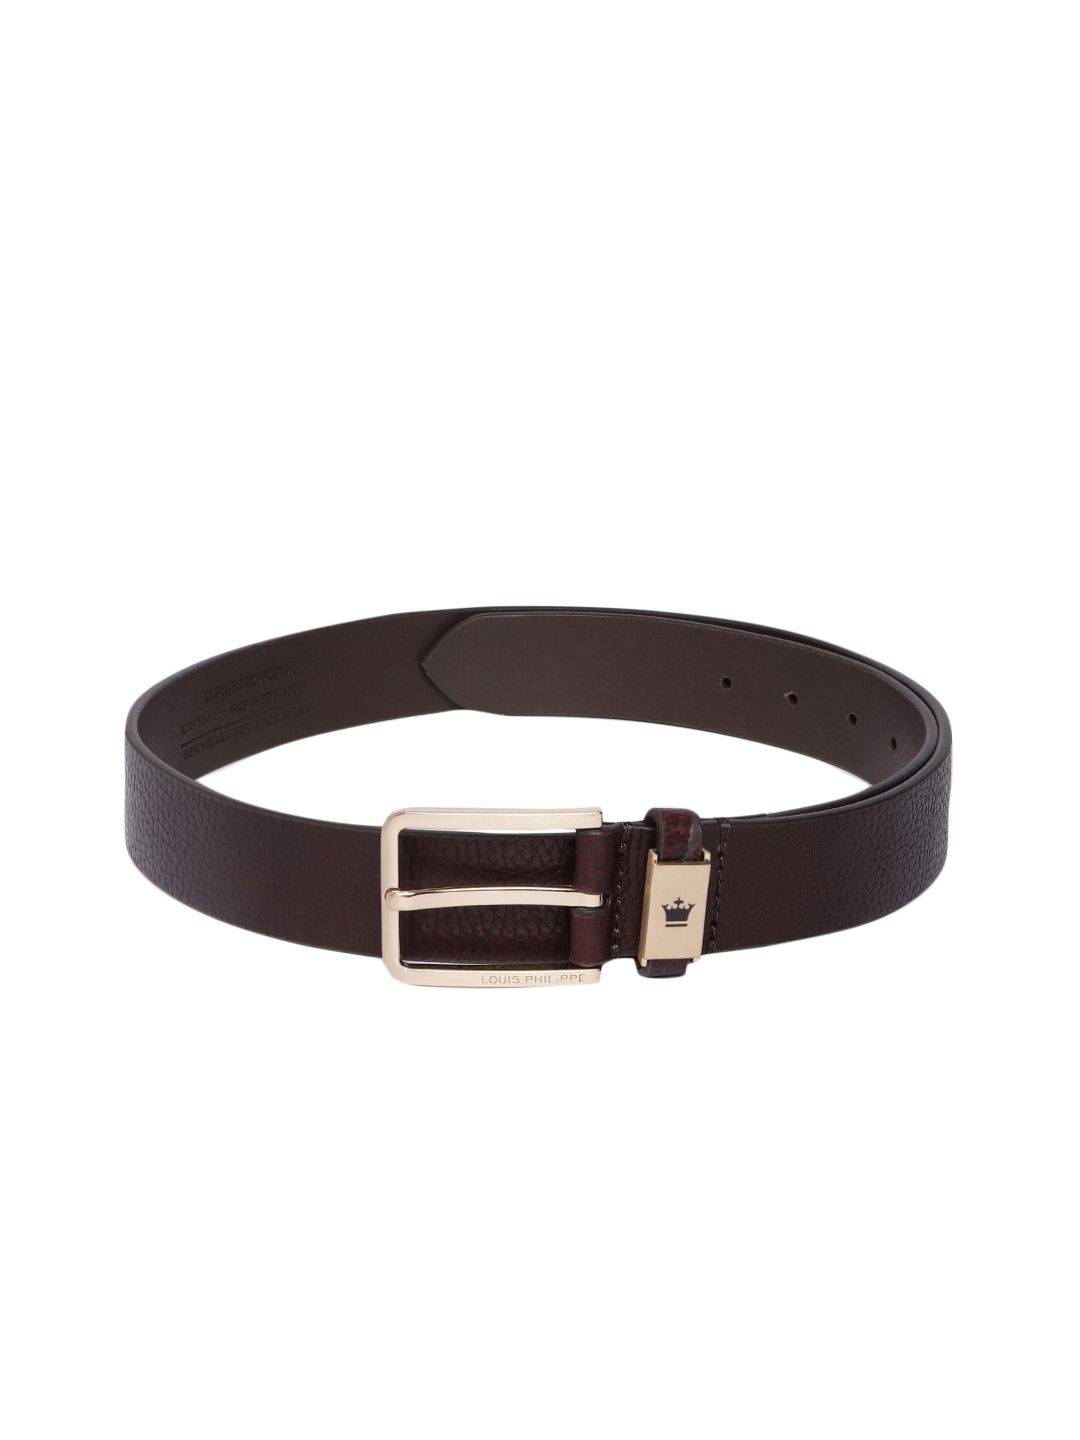 Buy Lapis Bard Sullivan Belt Carbon Black 35Mm Buckle with Two Tone  Leather-Chestnut Brown, Brown Color Men